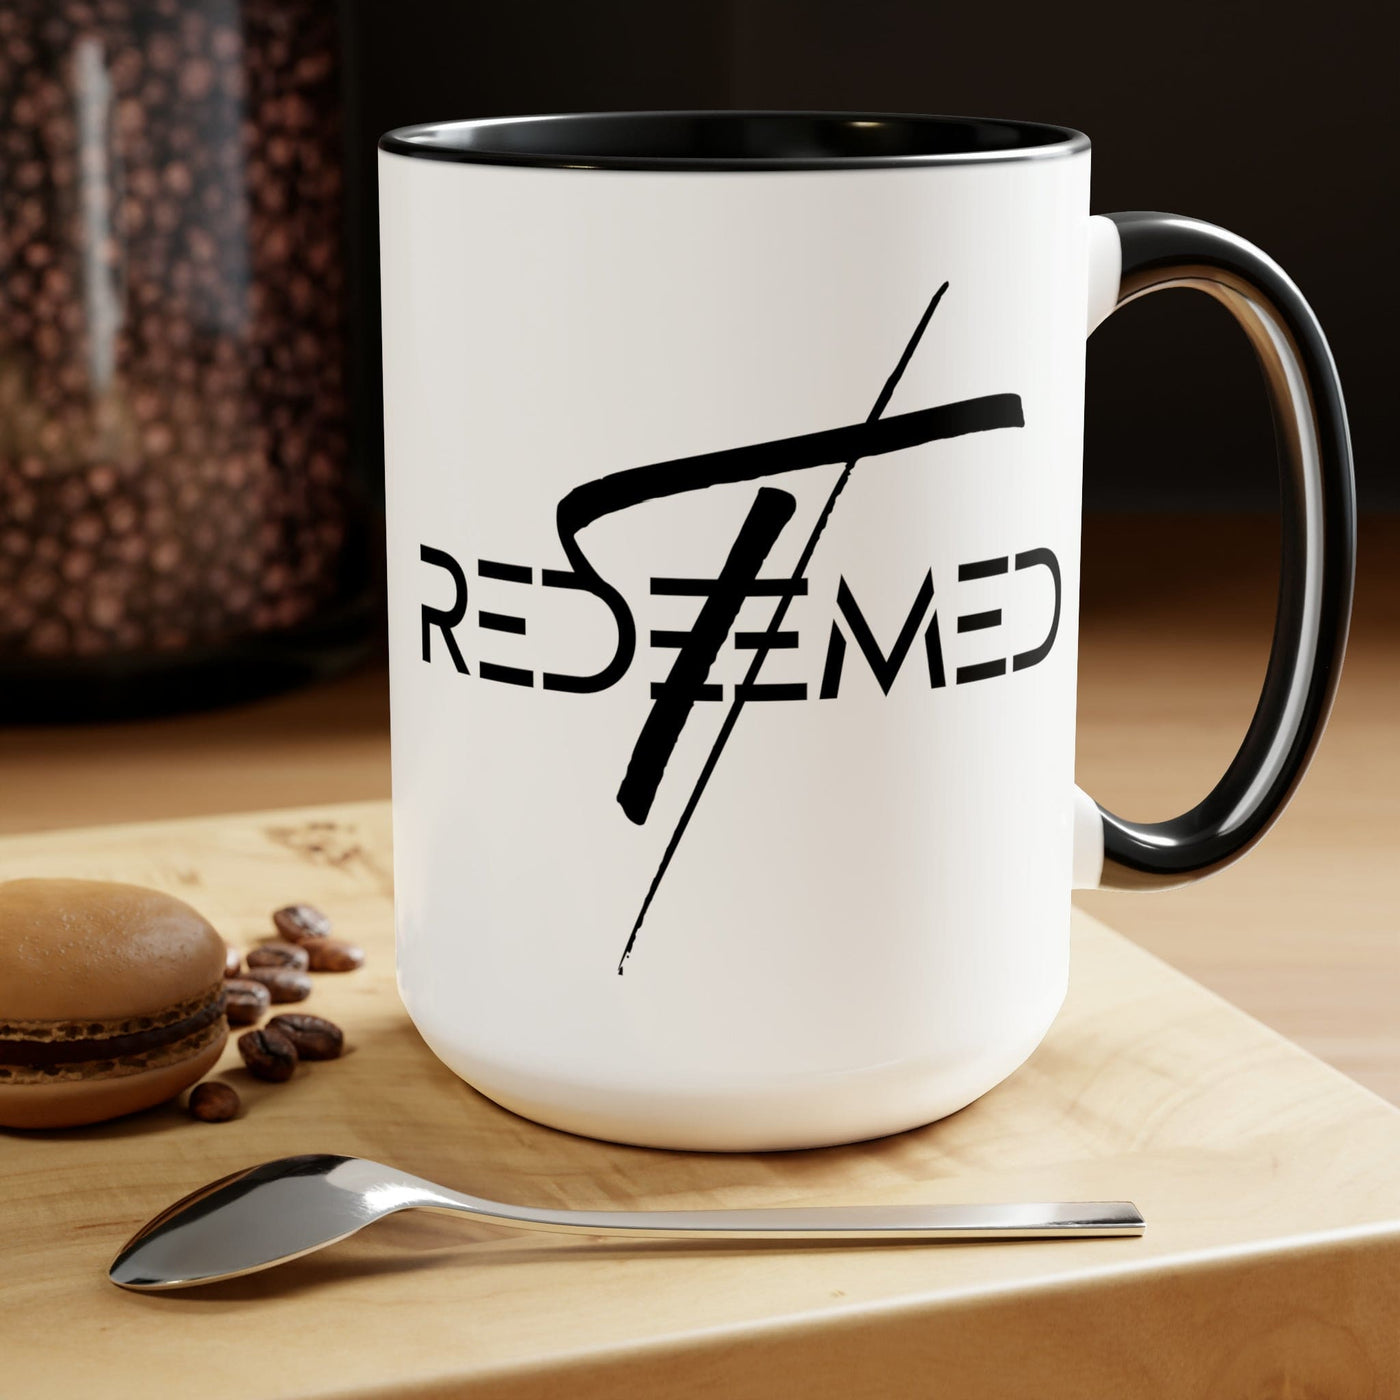 Accent Ceramic Coffee Mug 15oz - Redeemed Cross Black Illustration - Decorative